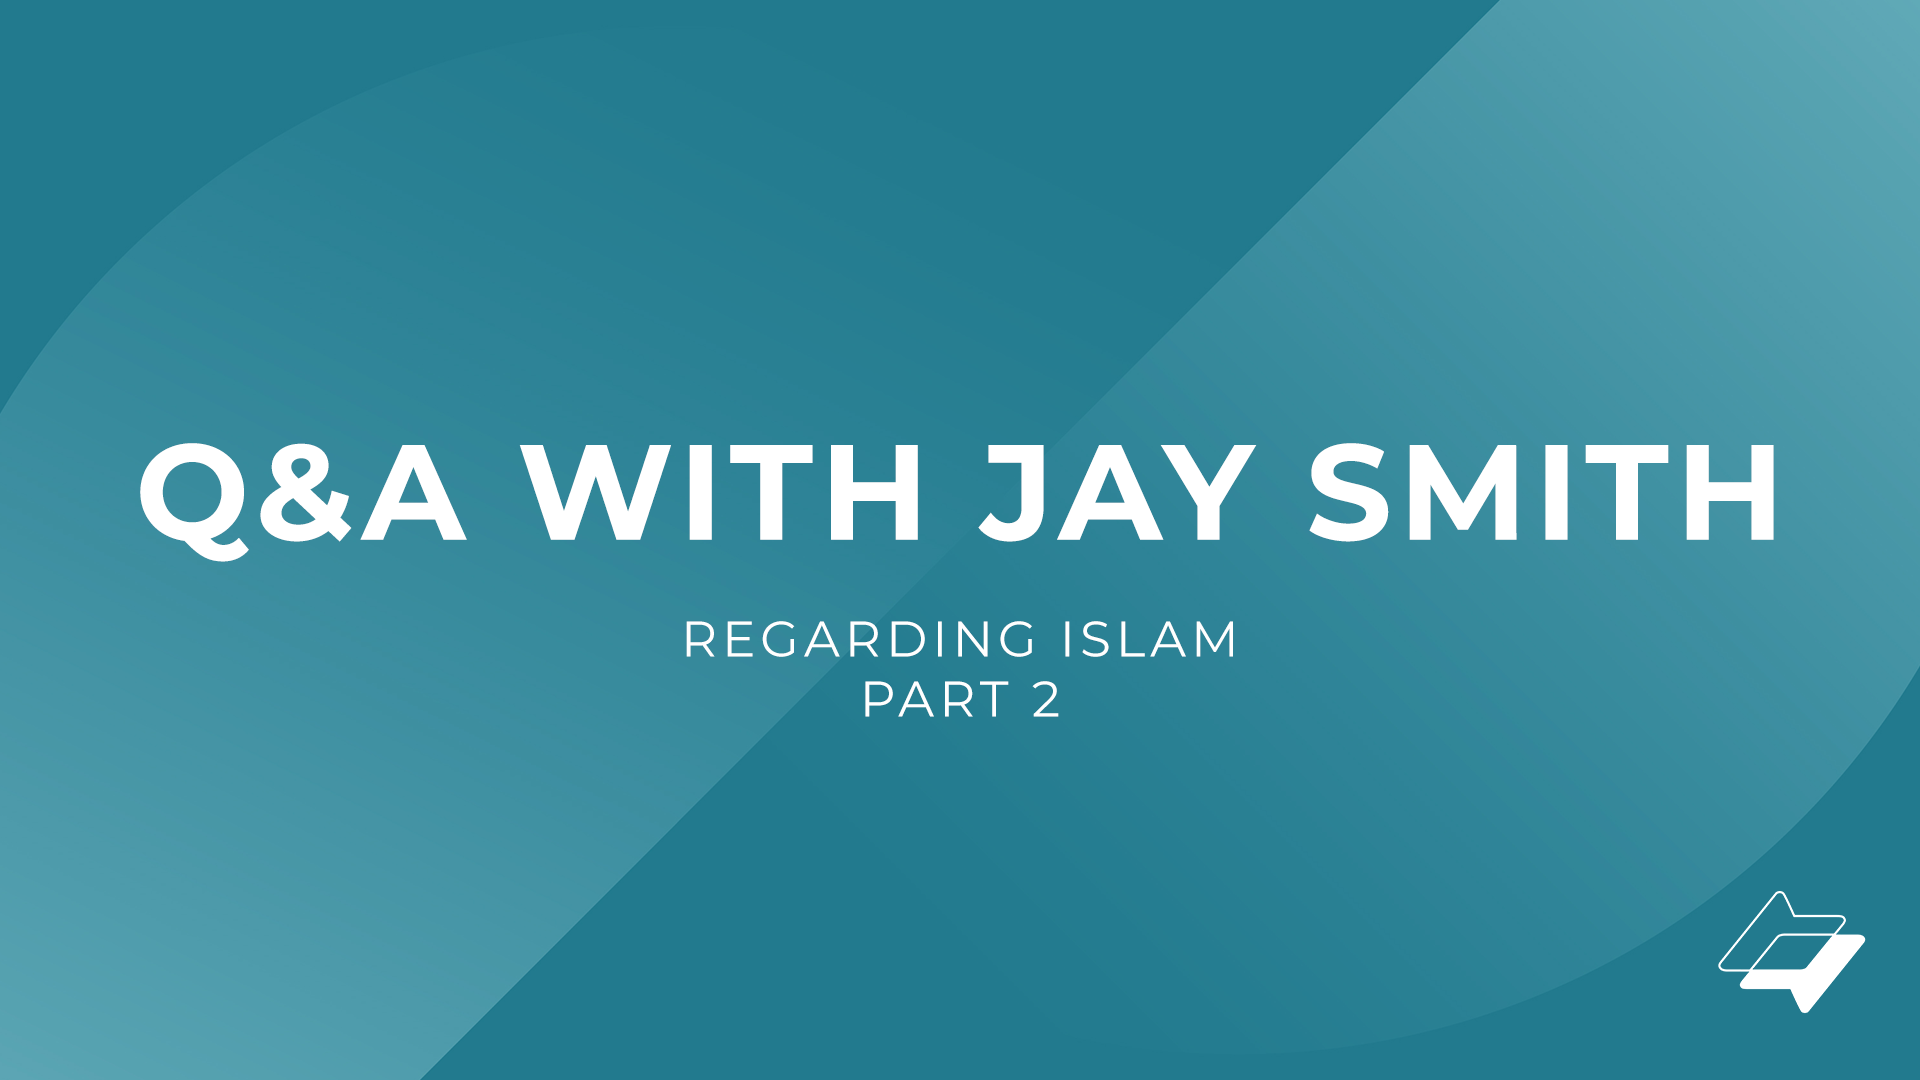 Q&A with Jay Smith Regarding Islam – Part 2